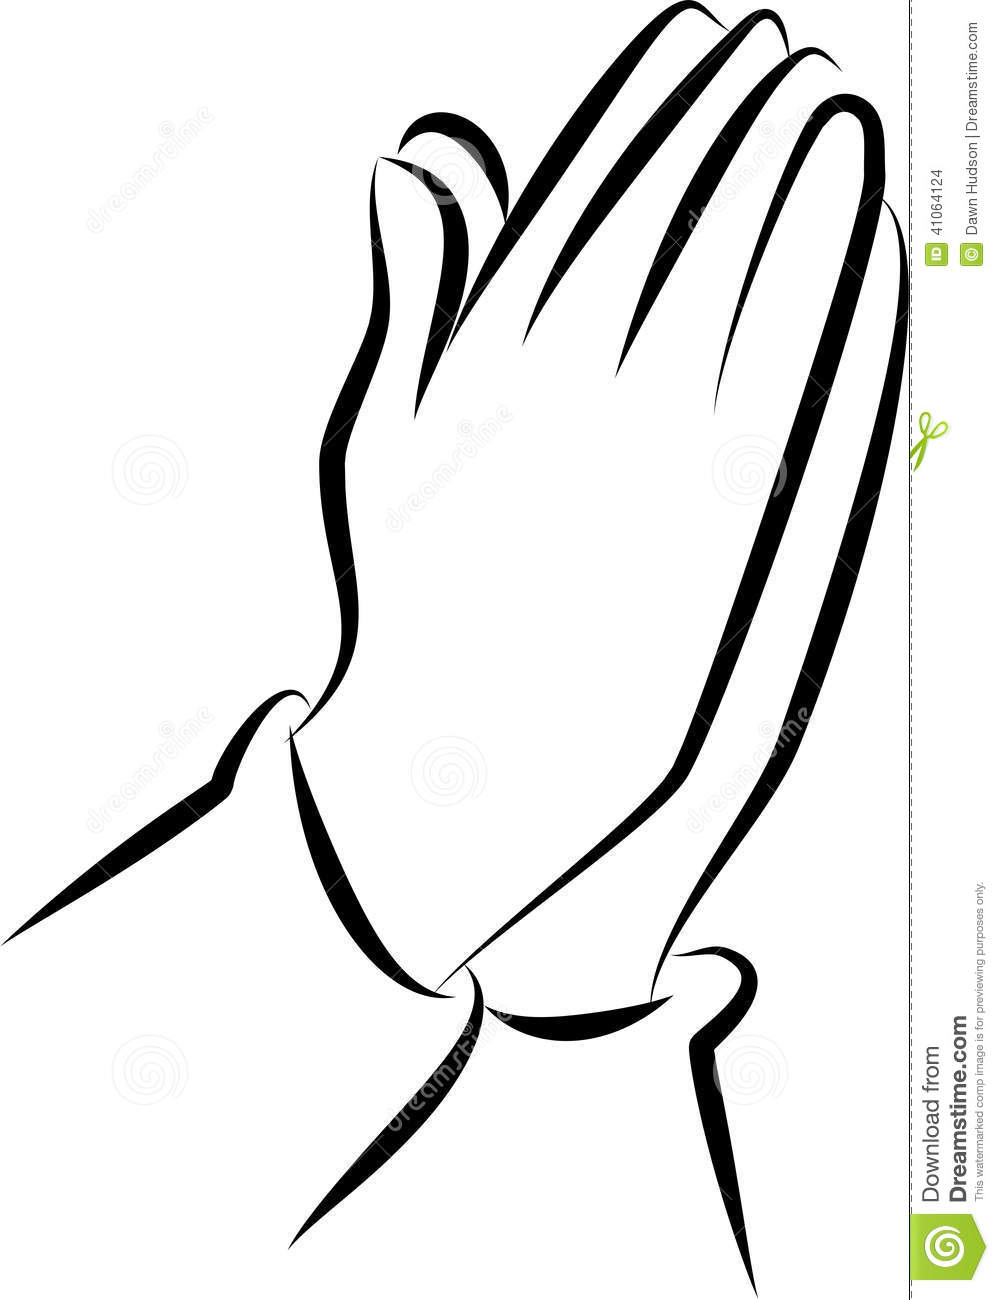 Praying hands clipart 4